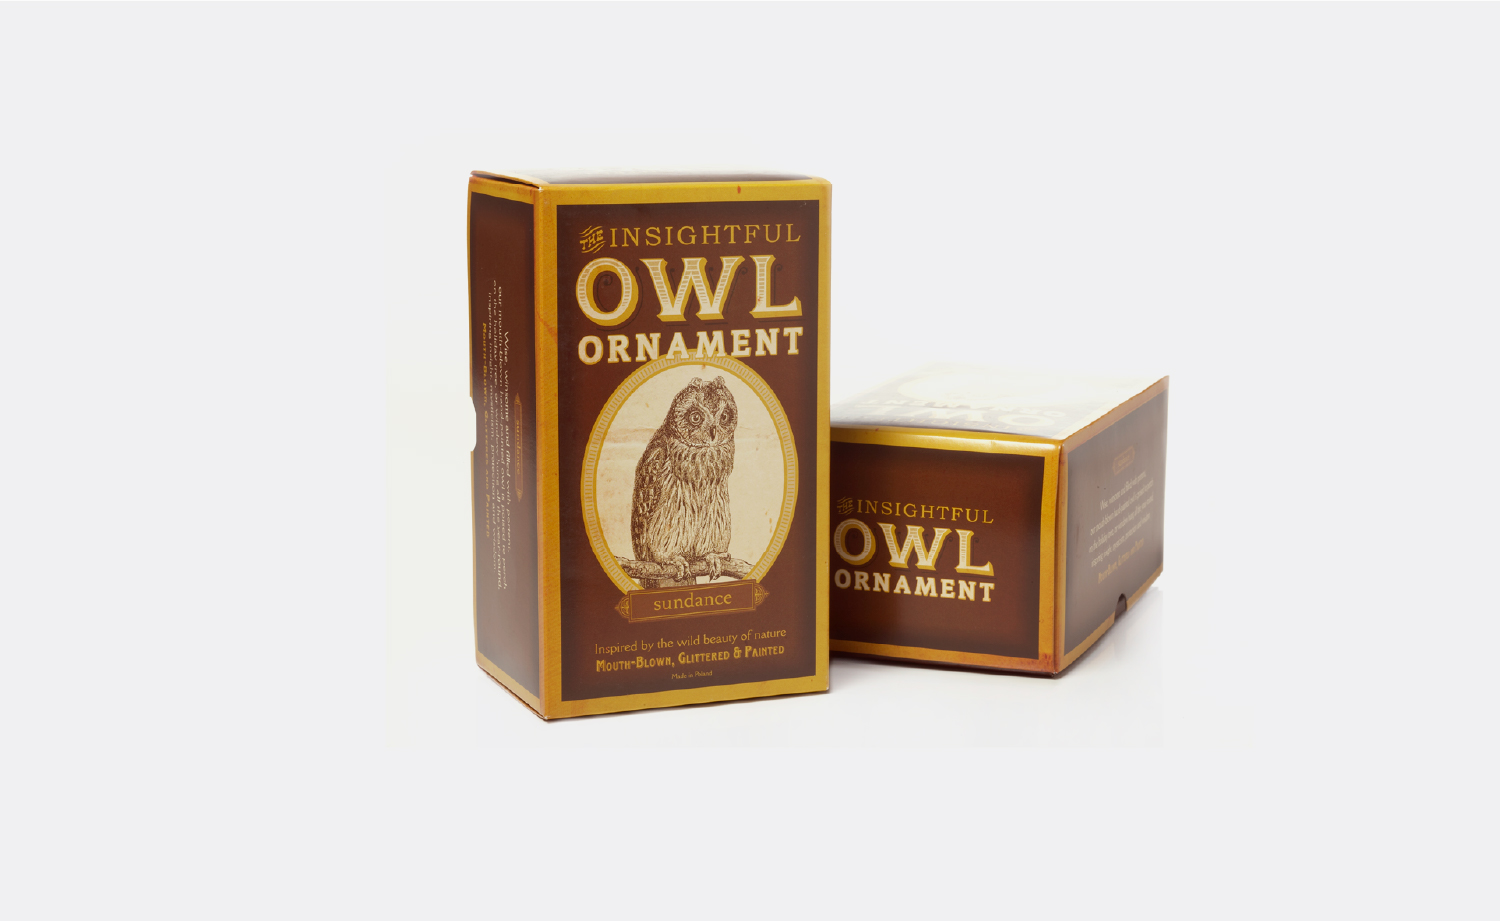 Sundance Catalog Co. Insightful Owl Ornament packaging.